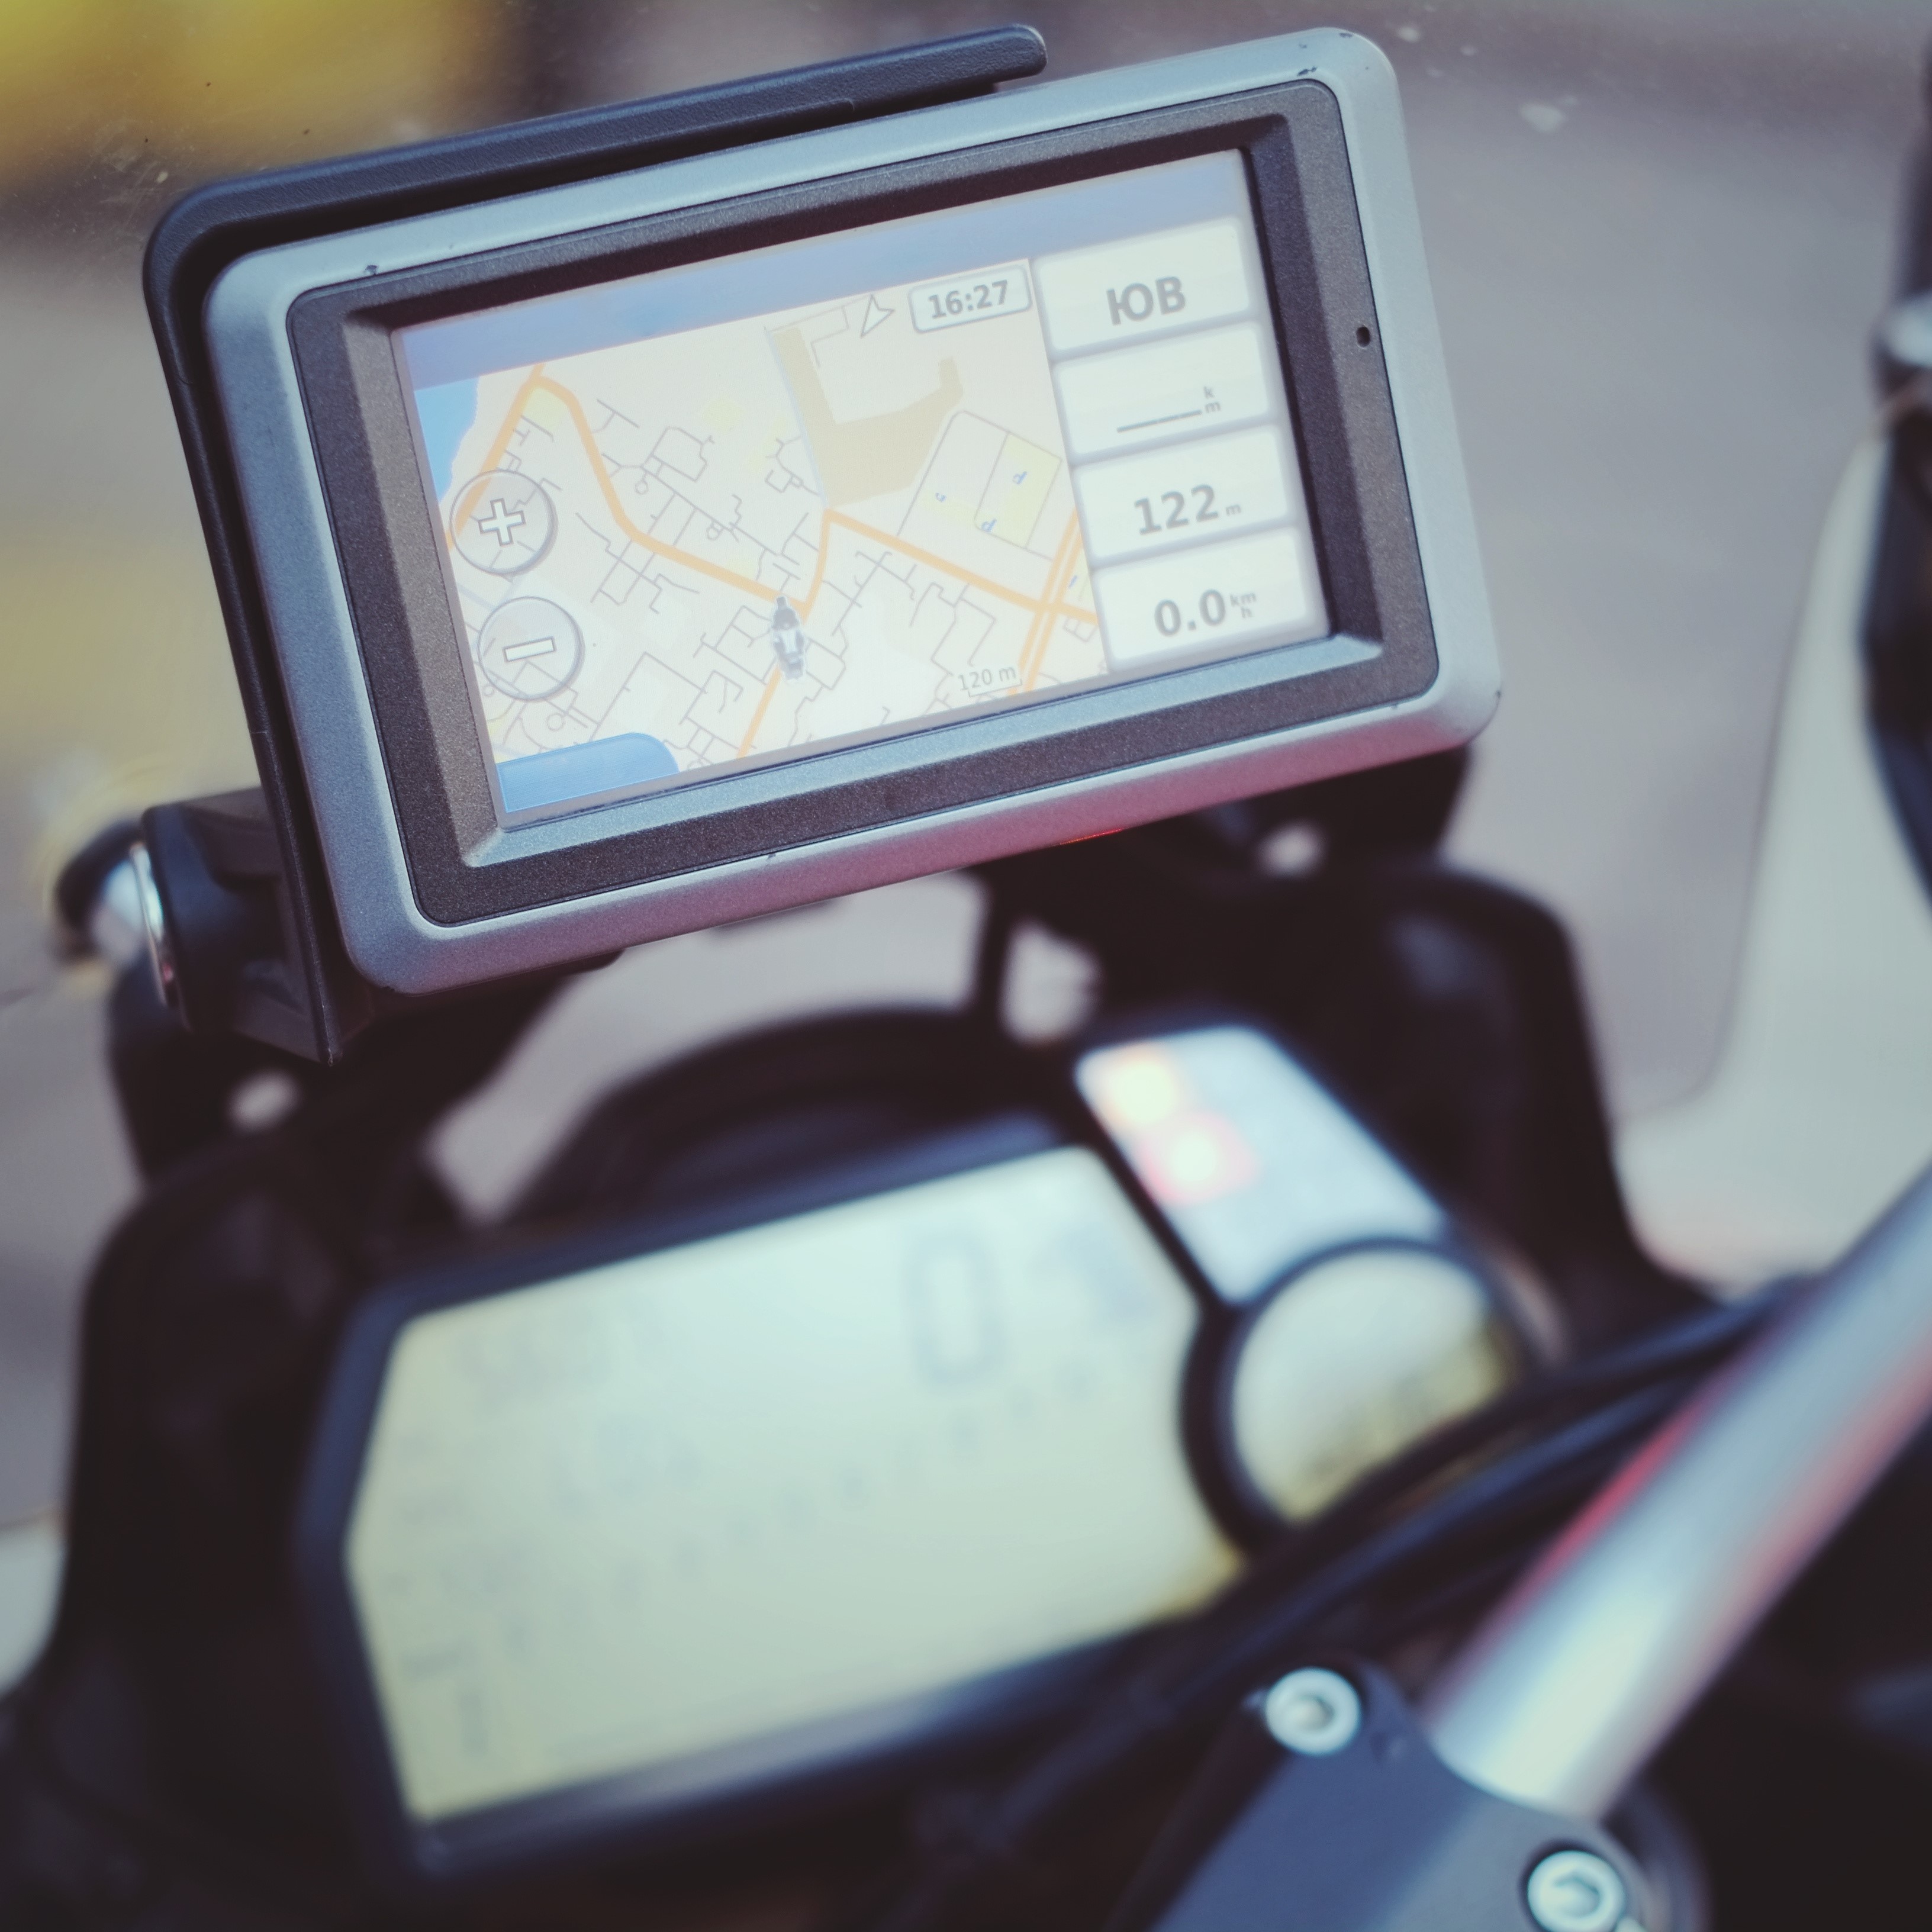 Navigation GPS